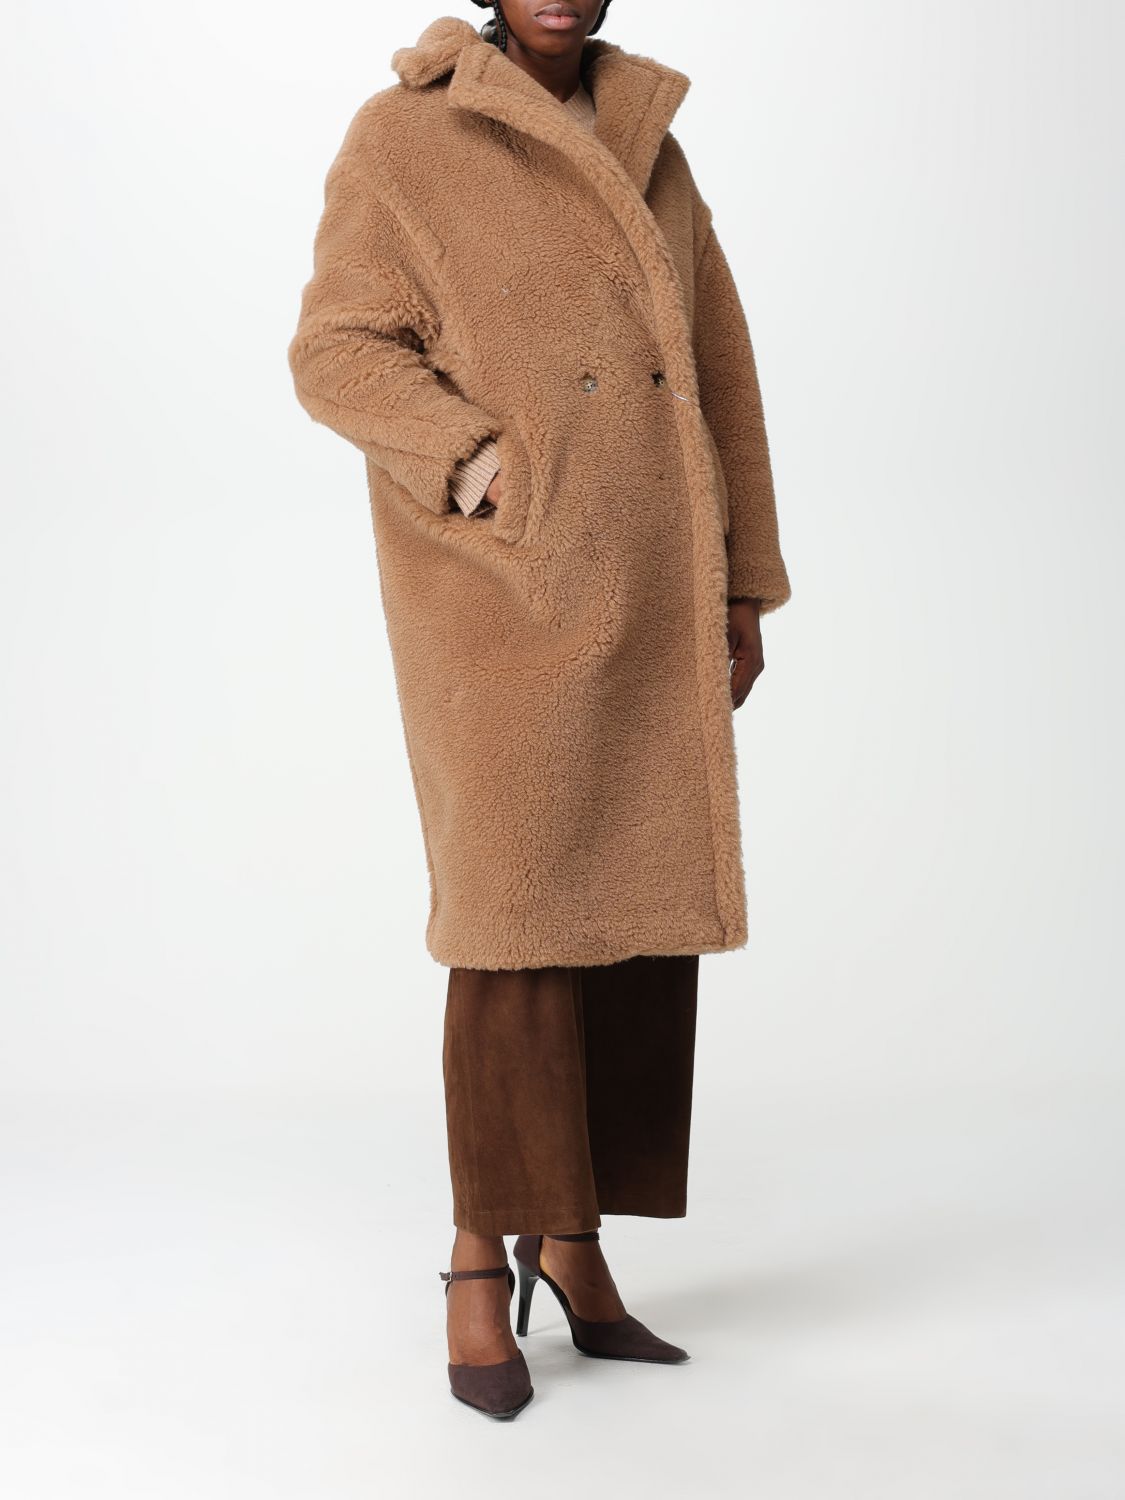 MAX MARA: Teddy coat in wool blend - Camel  Max Mara coat 2310161433600  online at